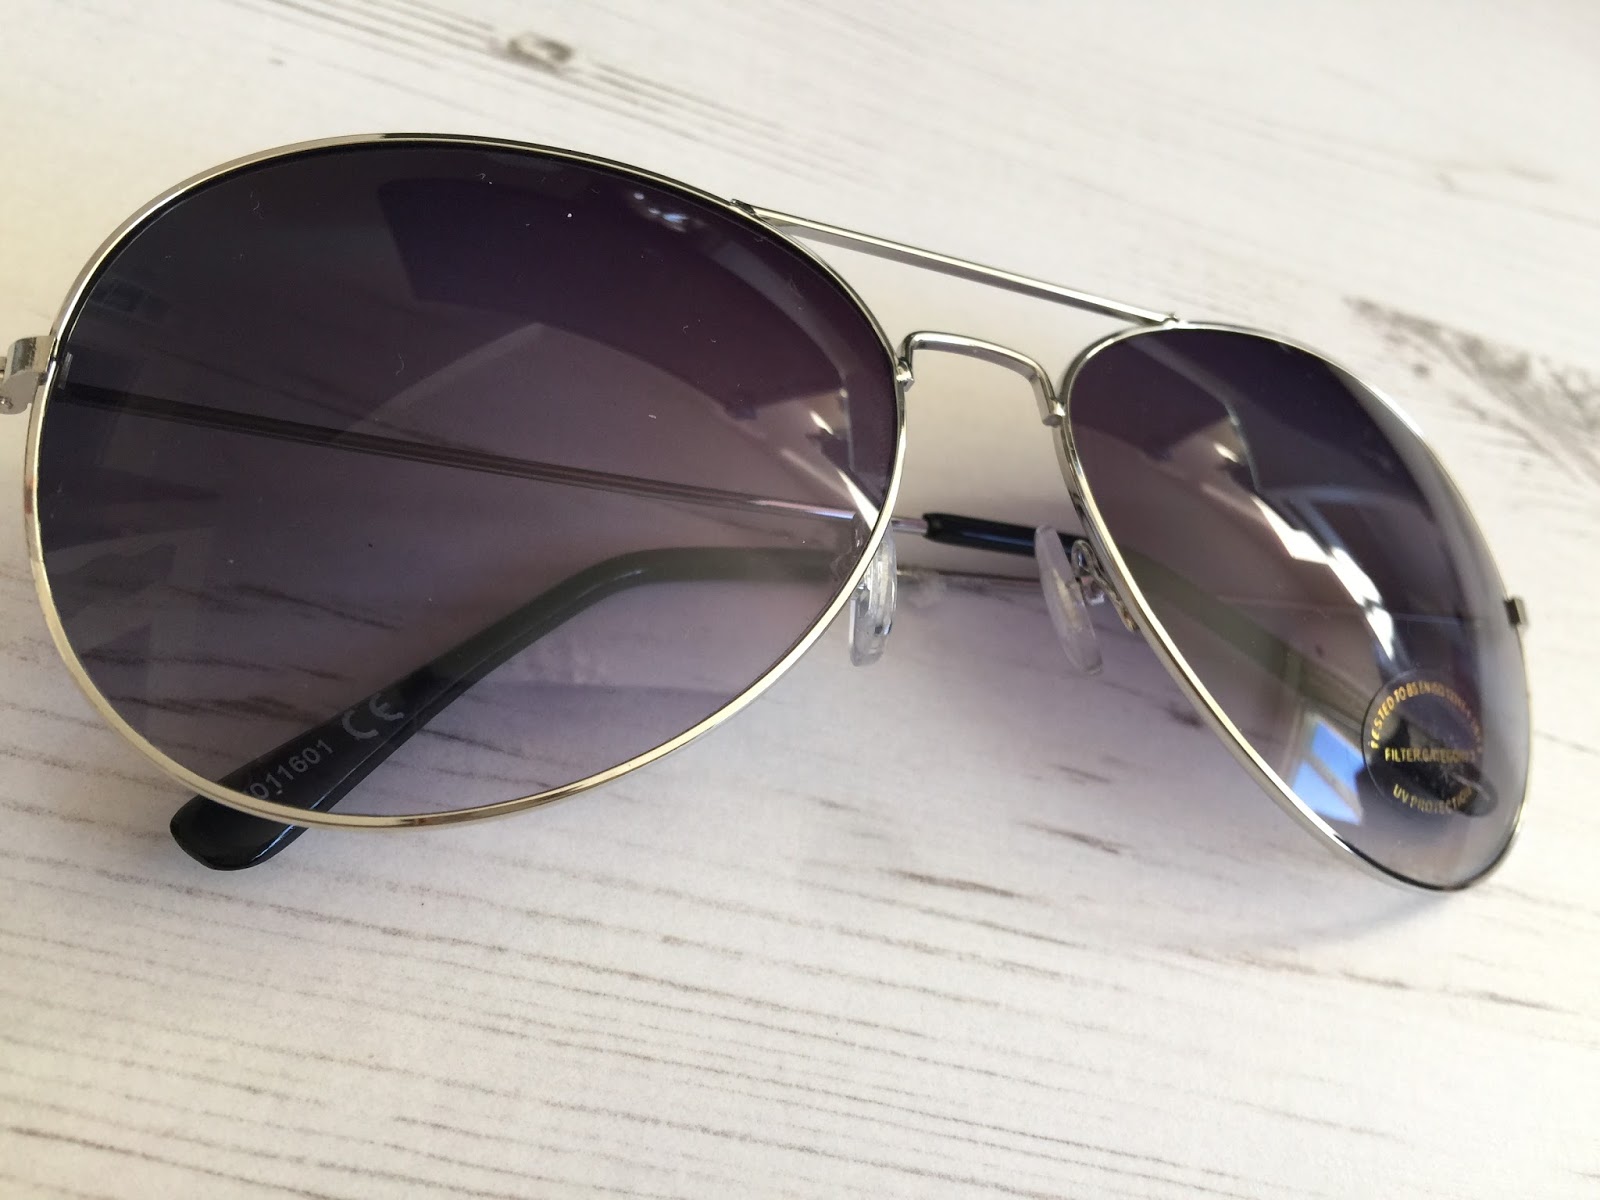 purple lense rayban style sunglasses